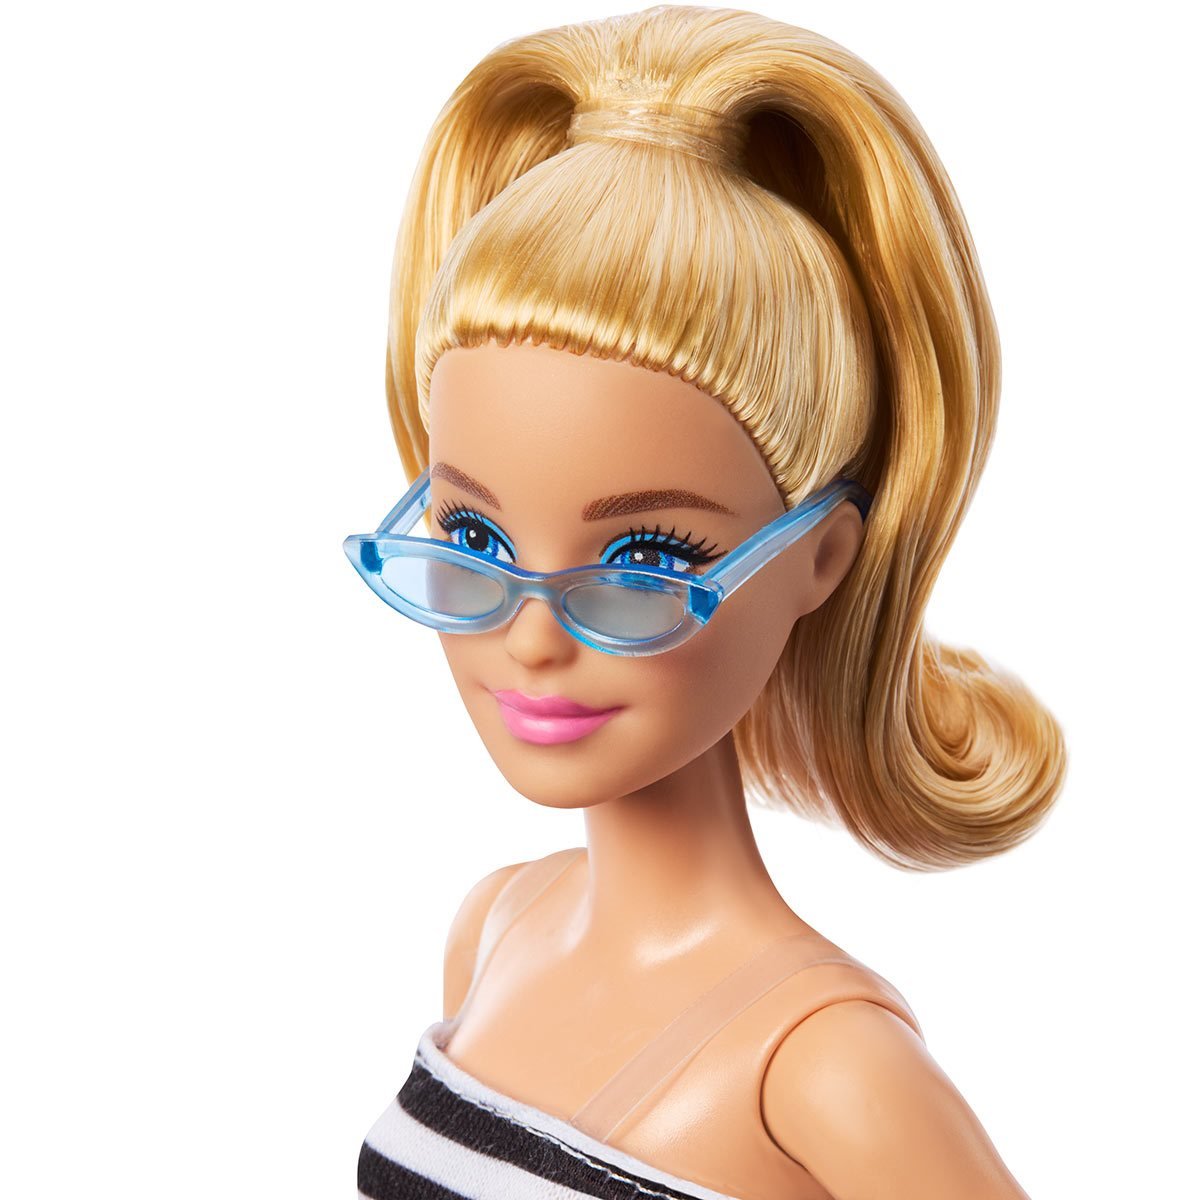 Barbie Fashionistas Doll #218 with Long Blue Hair, Rainbow Top & Teal Skirt